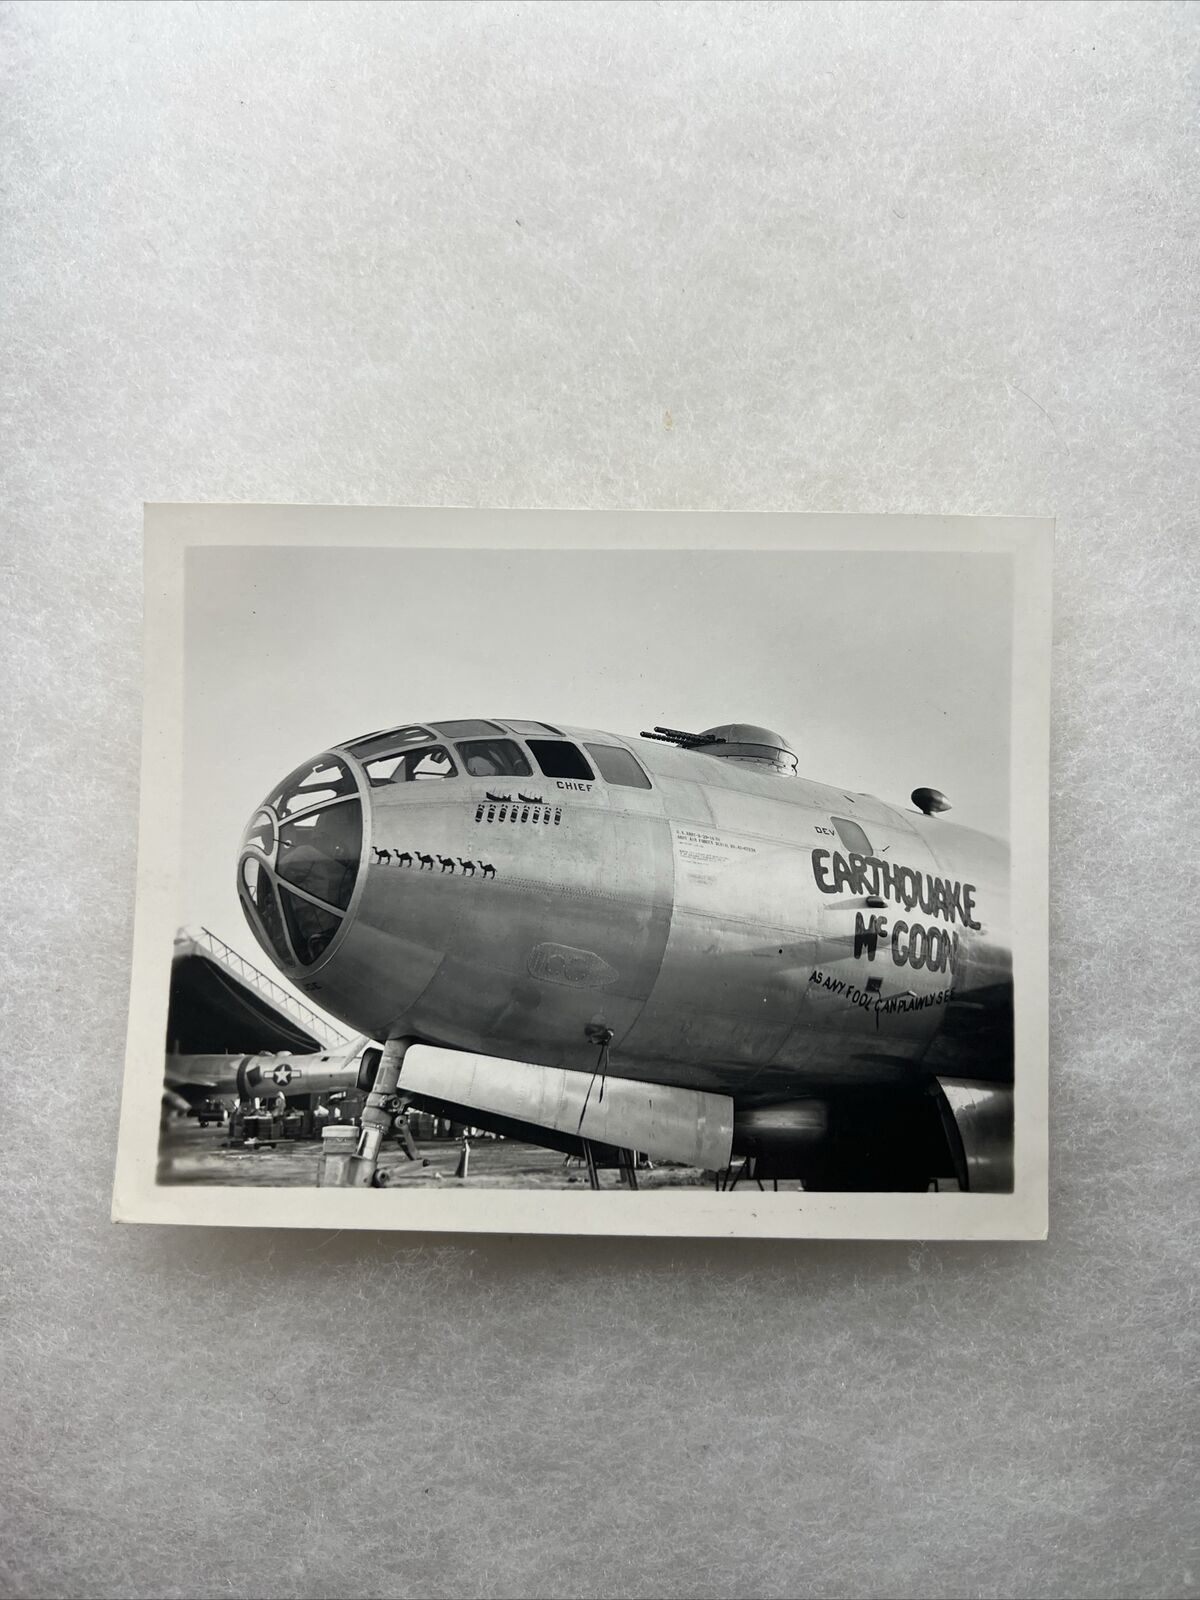 WW2 US Army Air Corps Nose Art “Earthquake McGoon” Plane Photo (V91